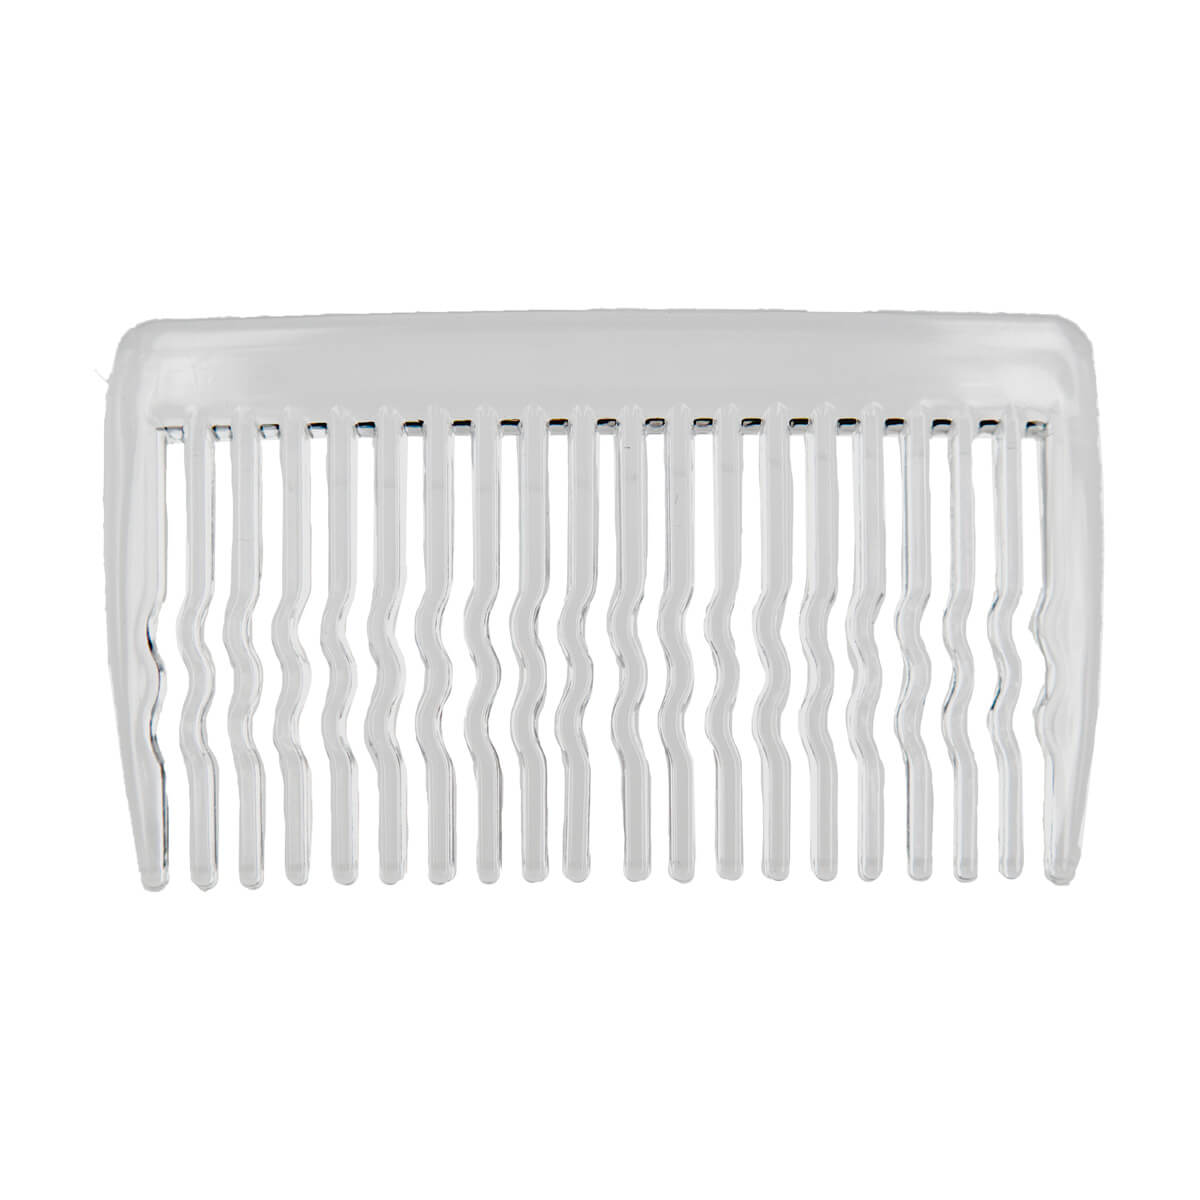 Plastic side comb 2pcs (6.3cm x 3.6cm)